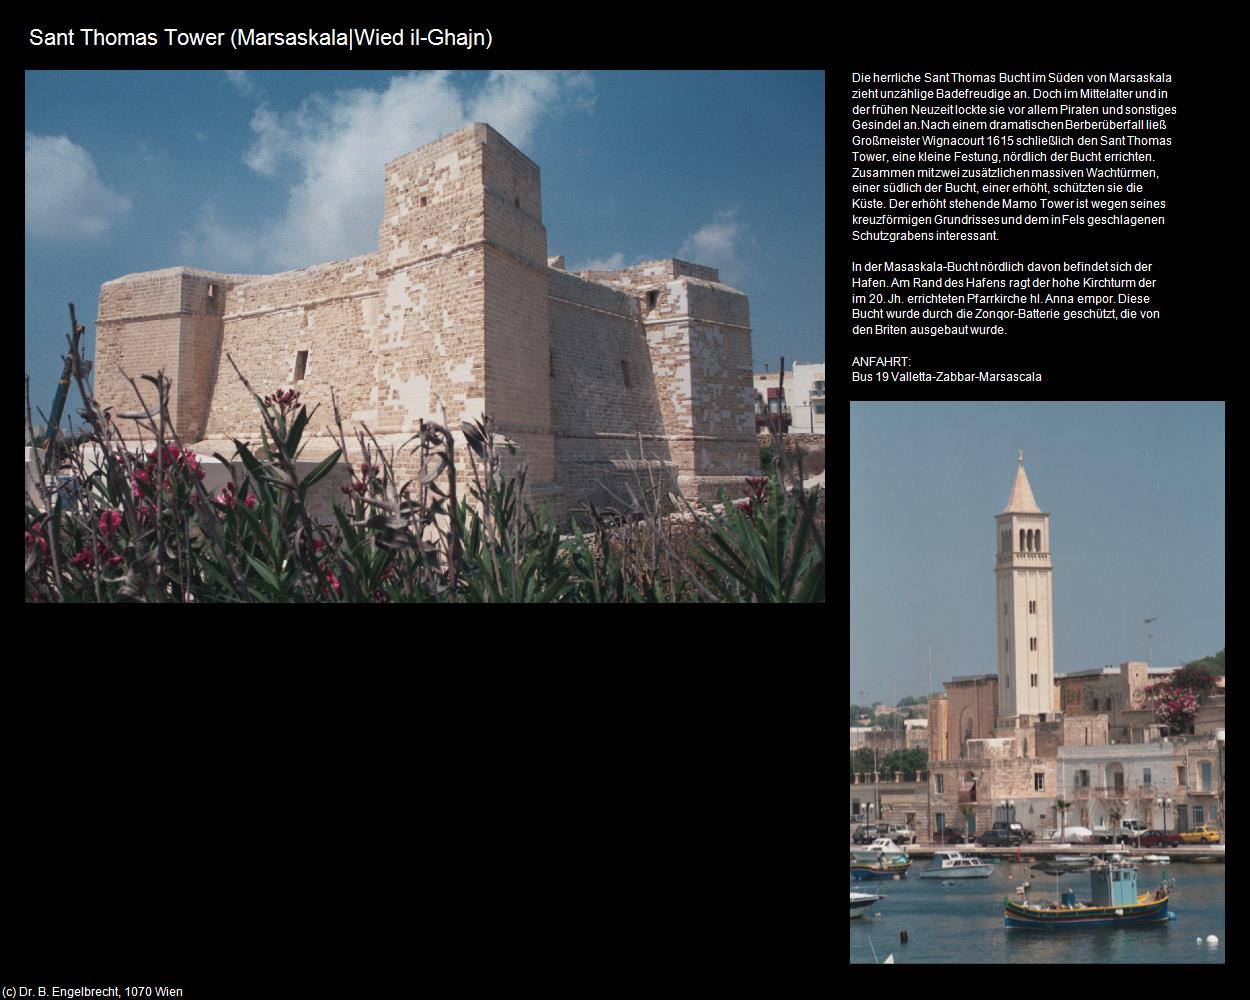 Sant Thomas Tower (Marsaskala|Wied il-Ghajn auf Malta) in Malta - Perle im Mittelmeer